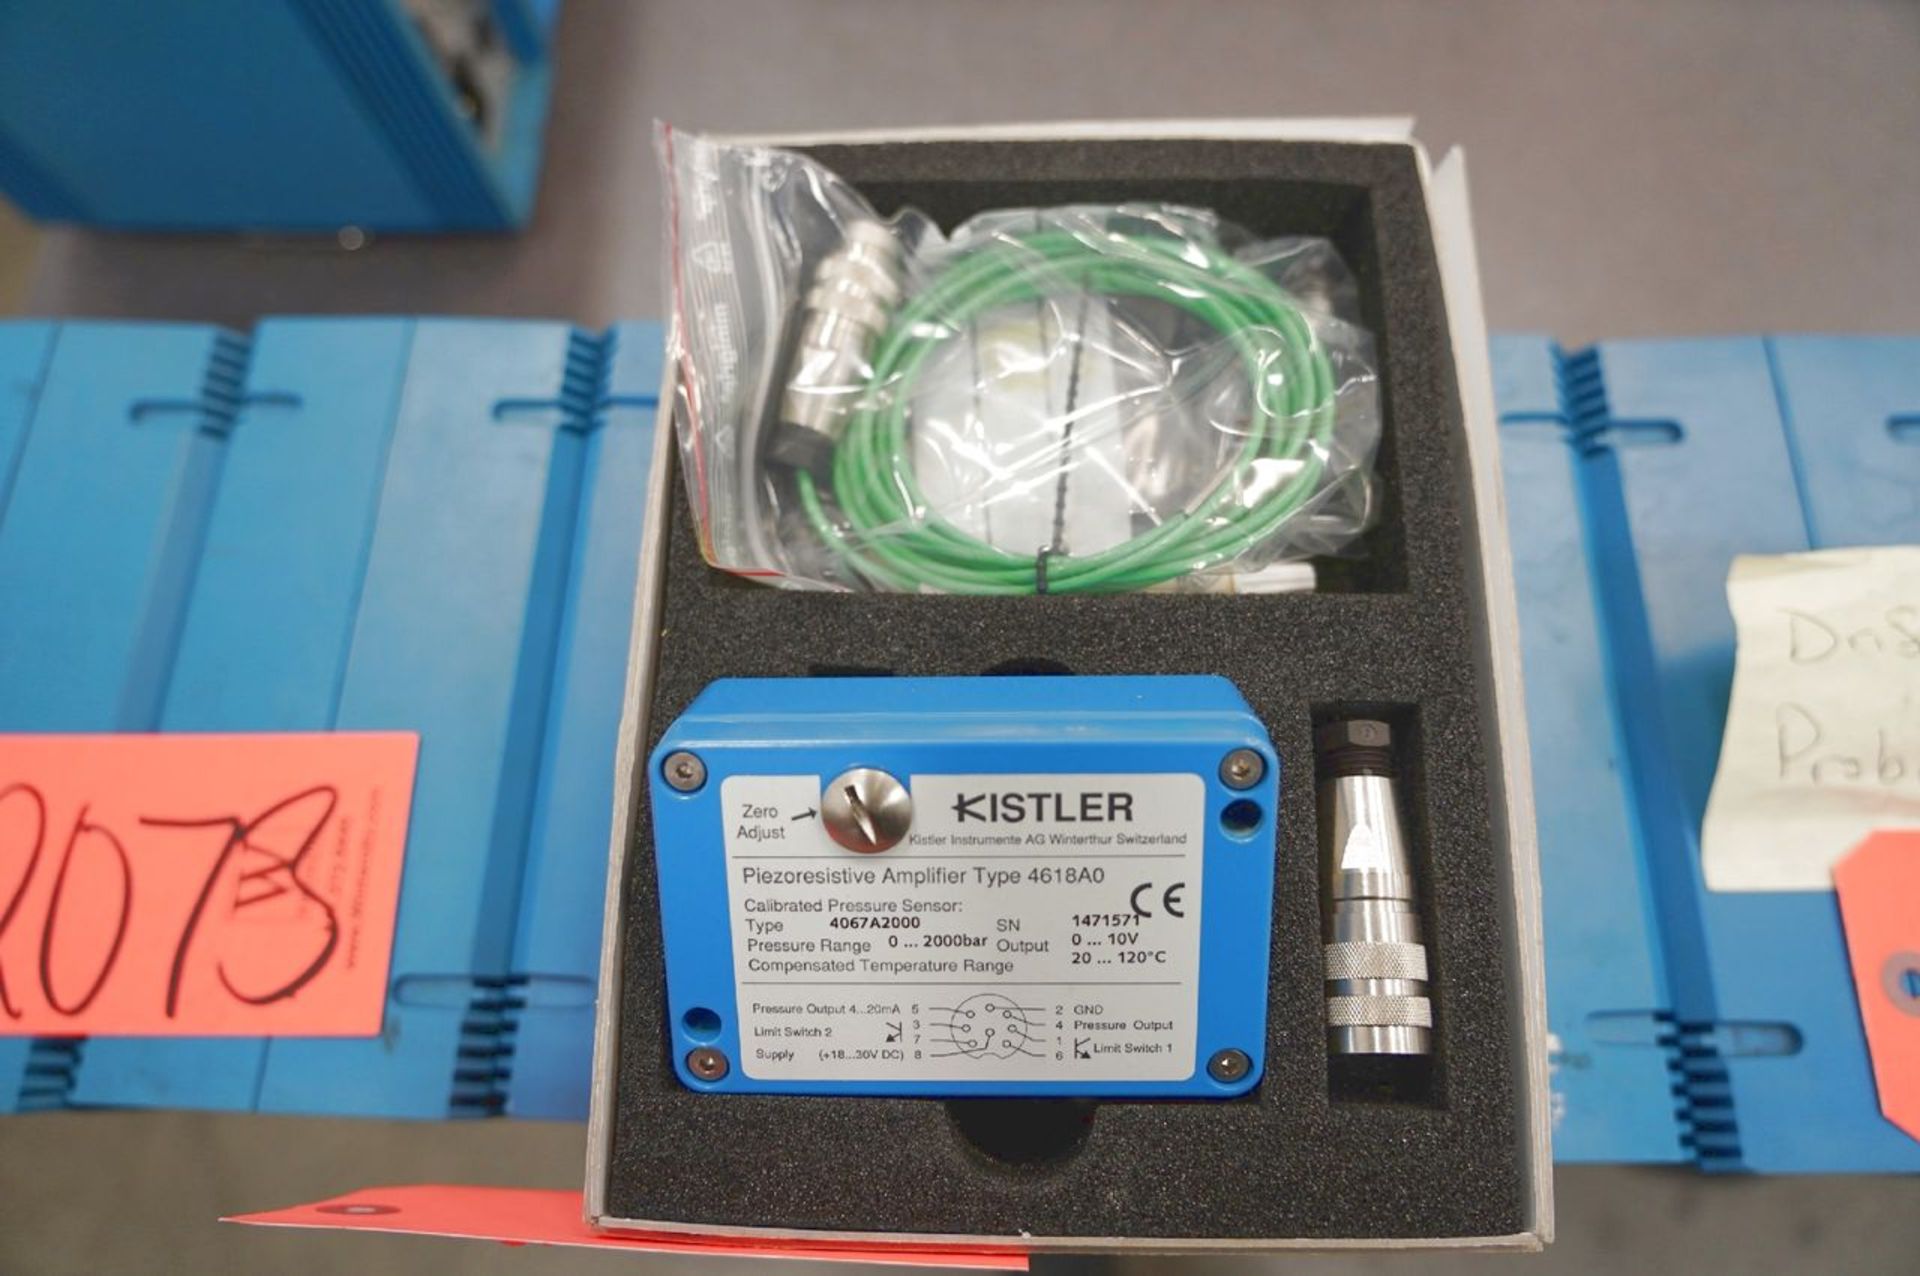 (4) Kistler 4067A2000 Piezoresistive Amplifier Pressure Sensors (Instrumentation and Electronics Lab - Image 3 of 4